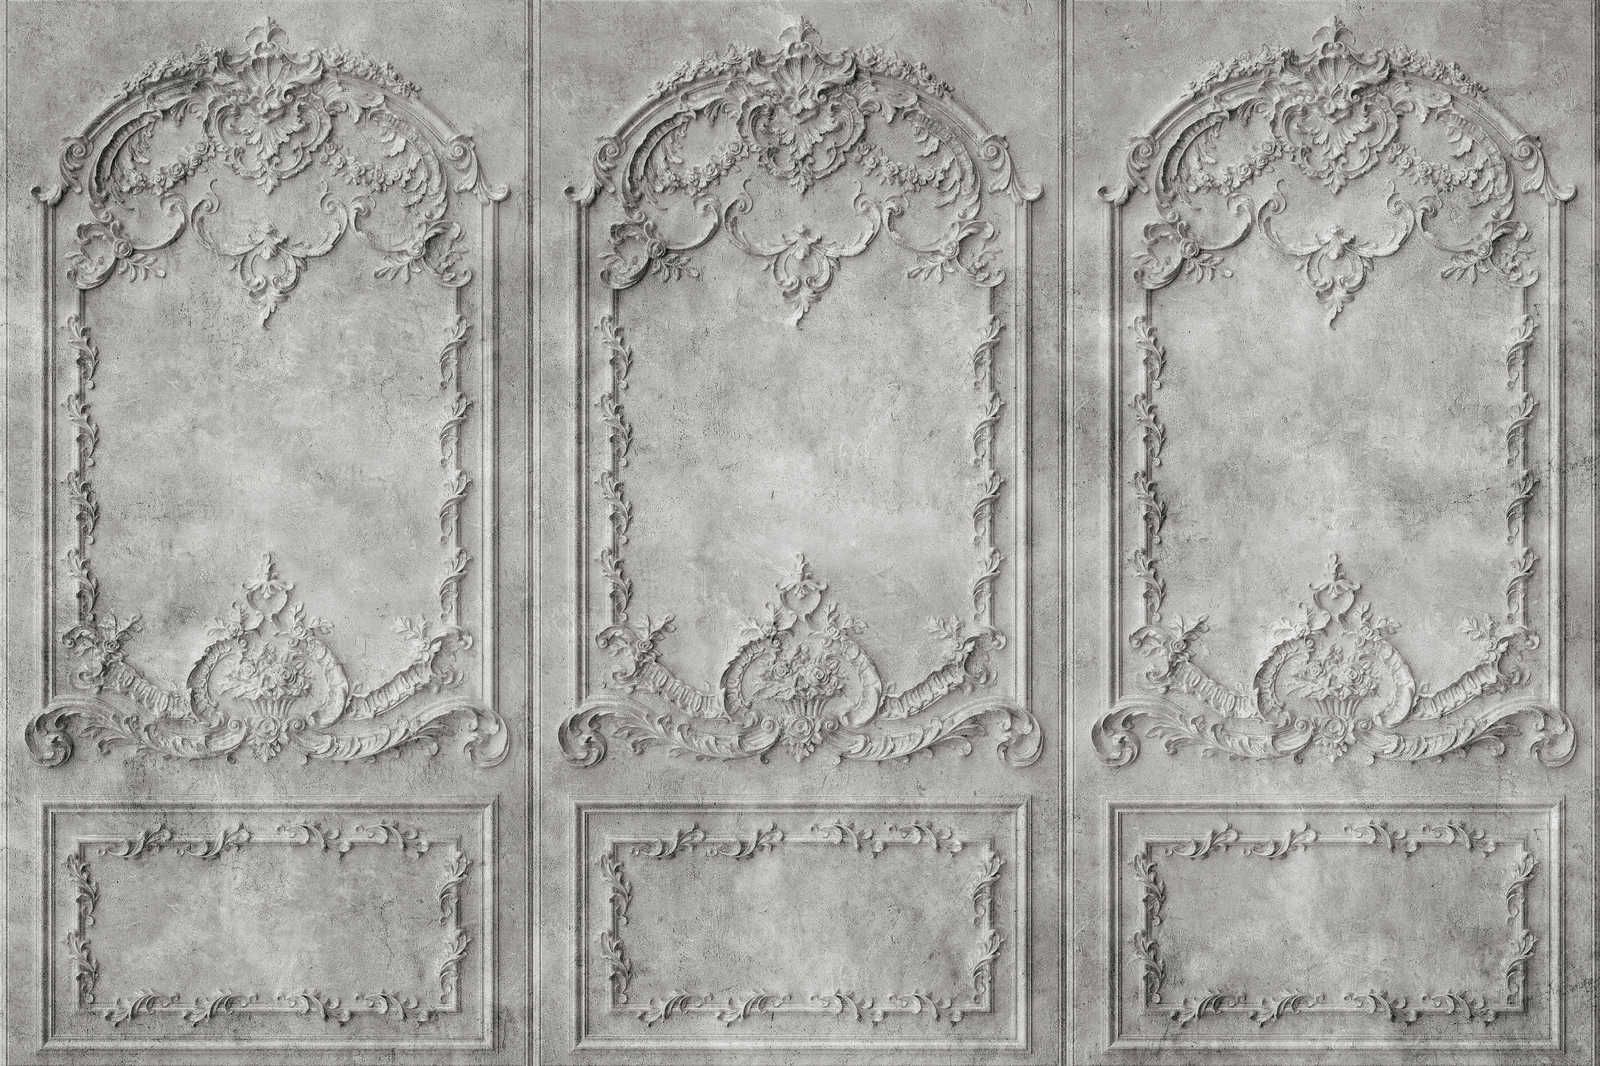             Versailles 2 - Leinwandbild Holz-Paneele Grau im Barock Stil – 0,90 m x 0,60 m
        